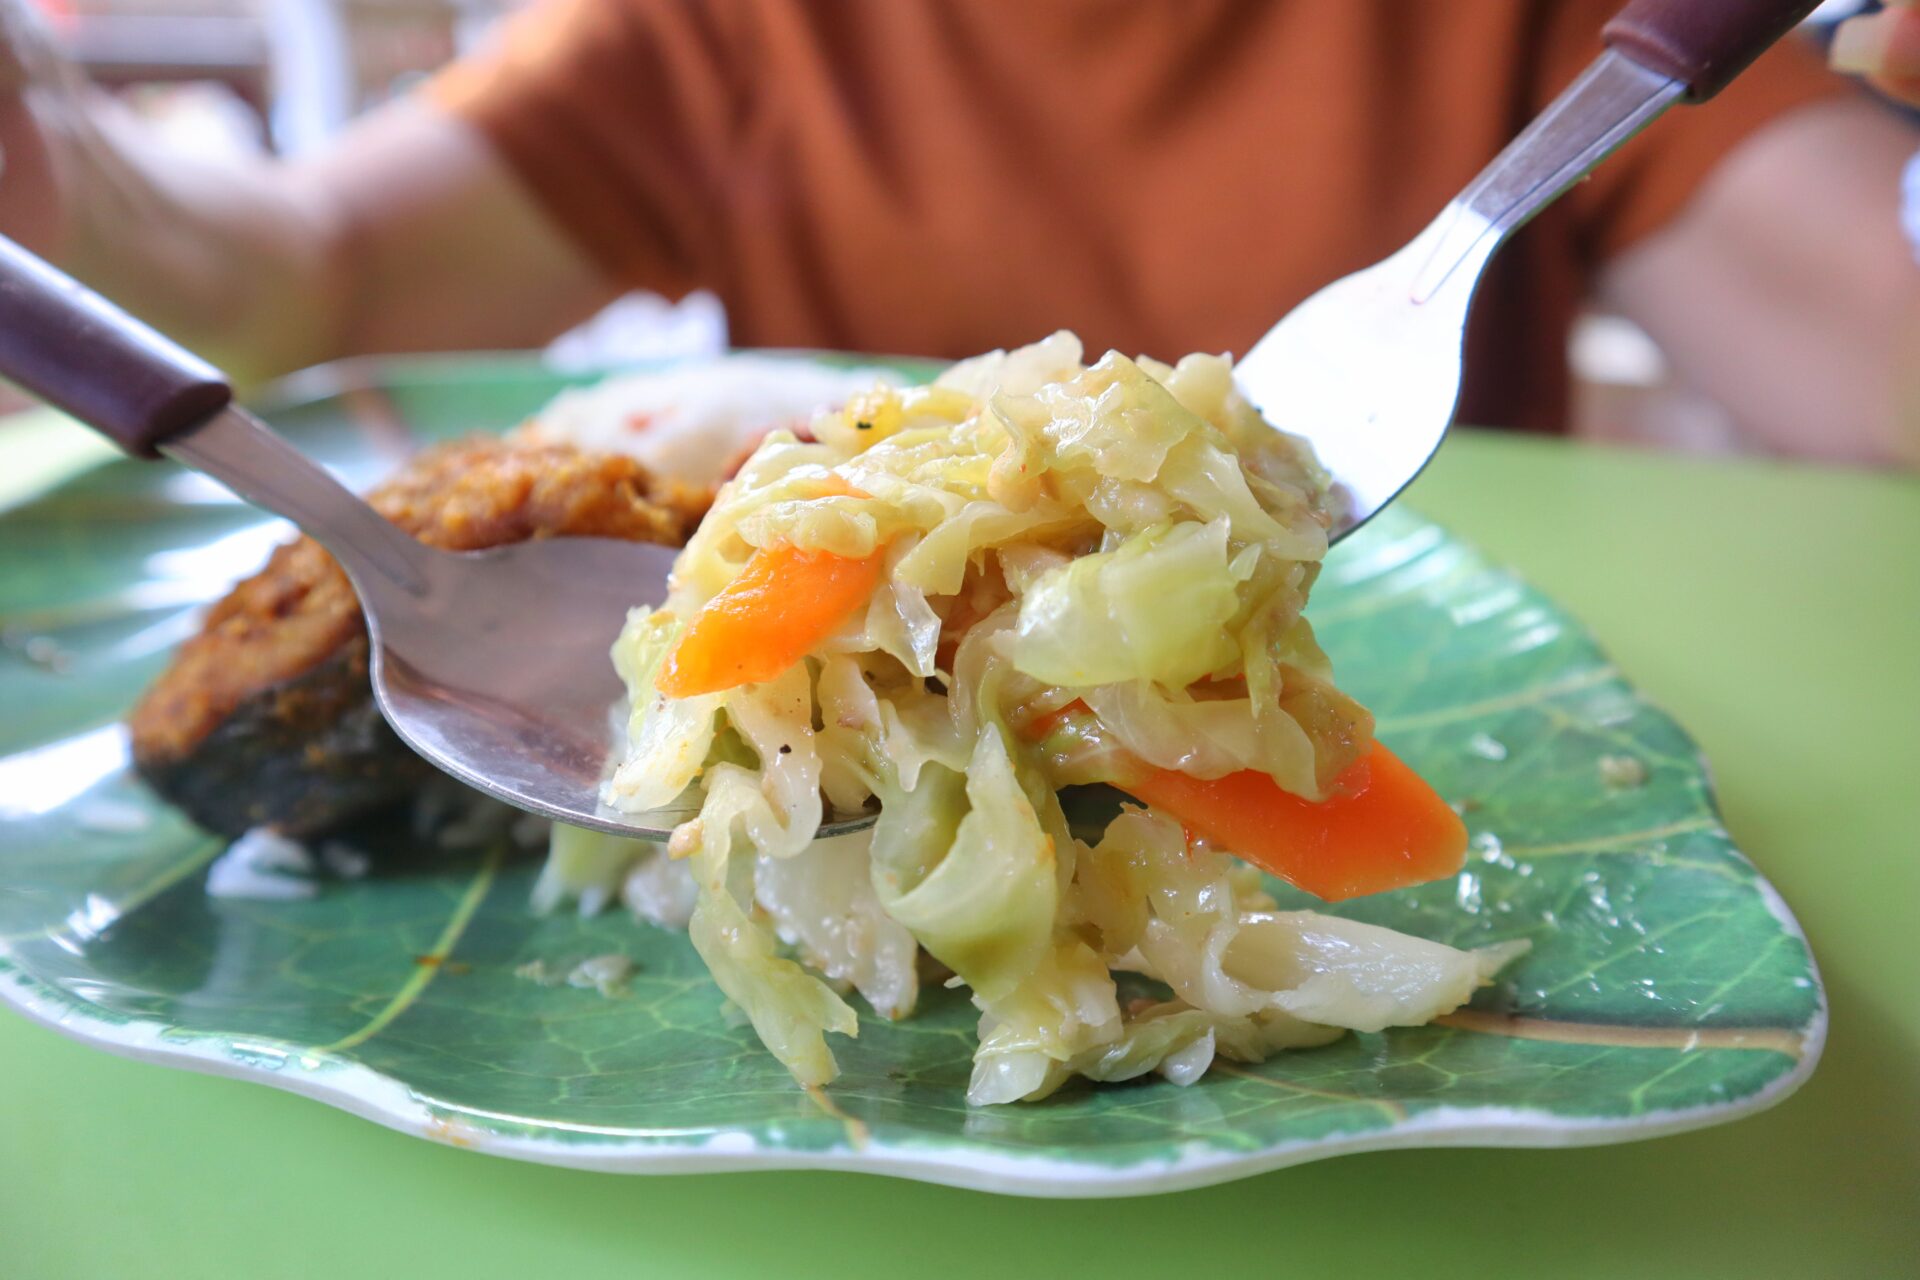 anthony indonesian cuisine - braised veggies